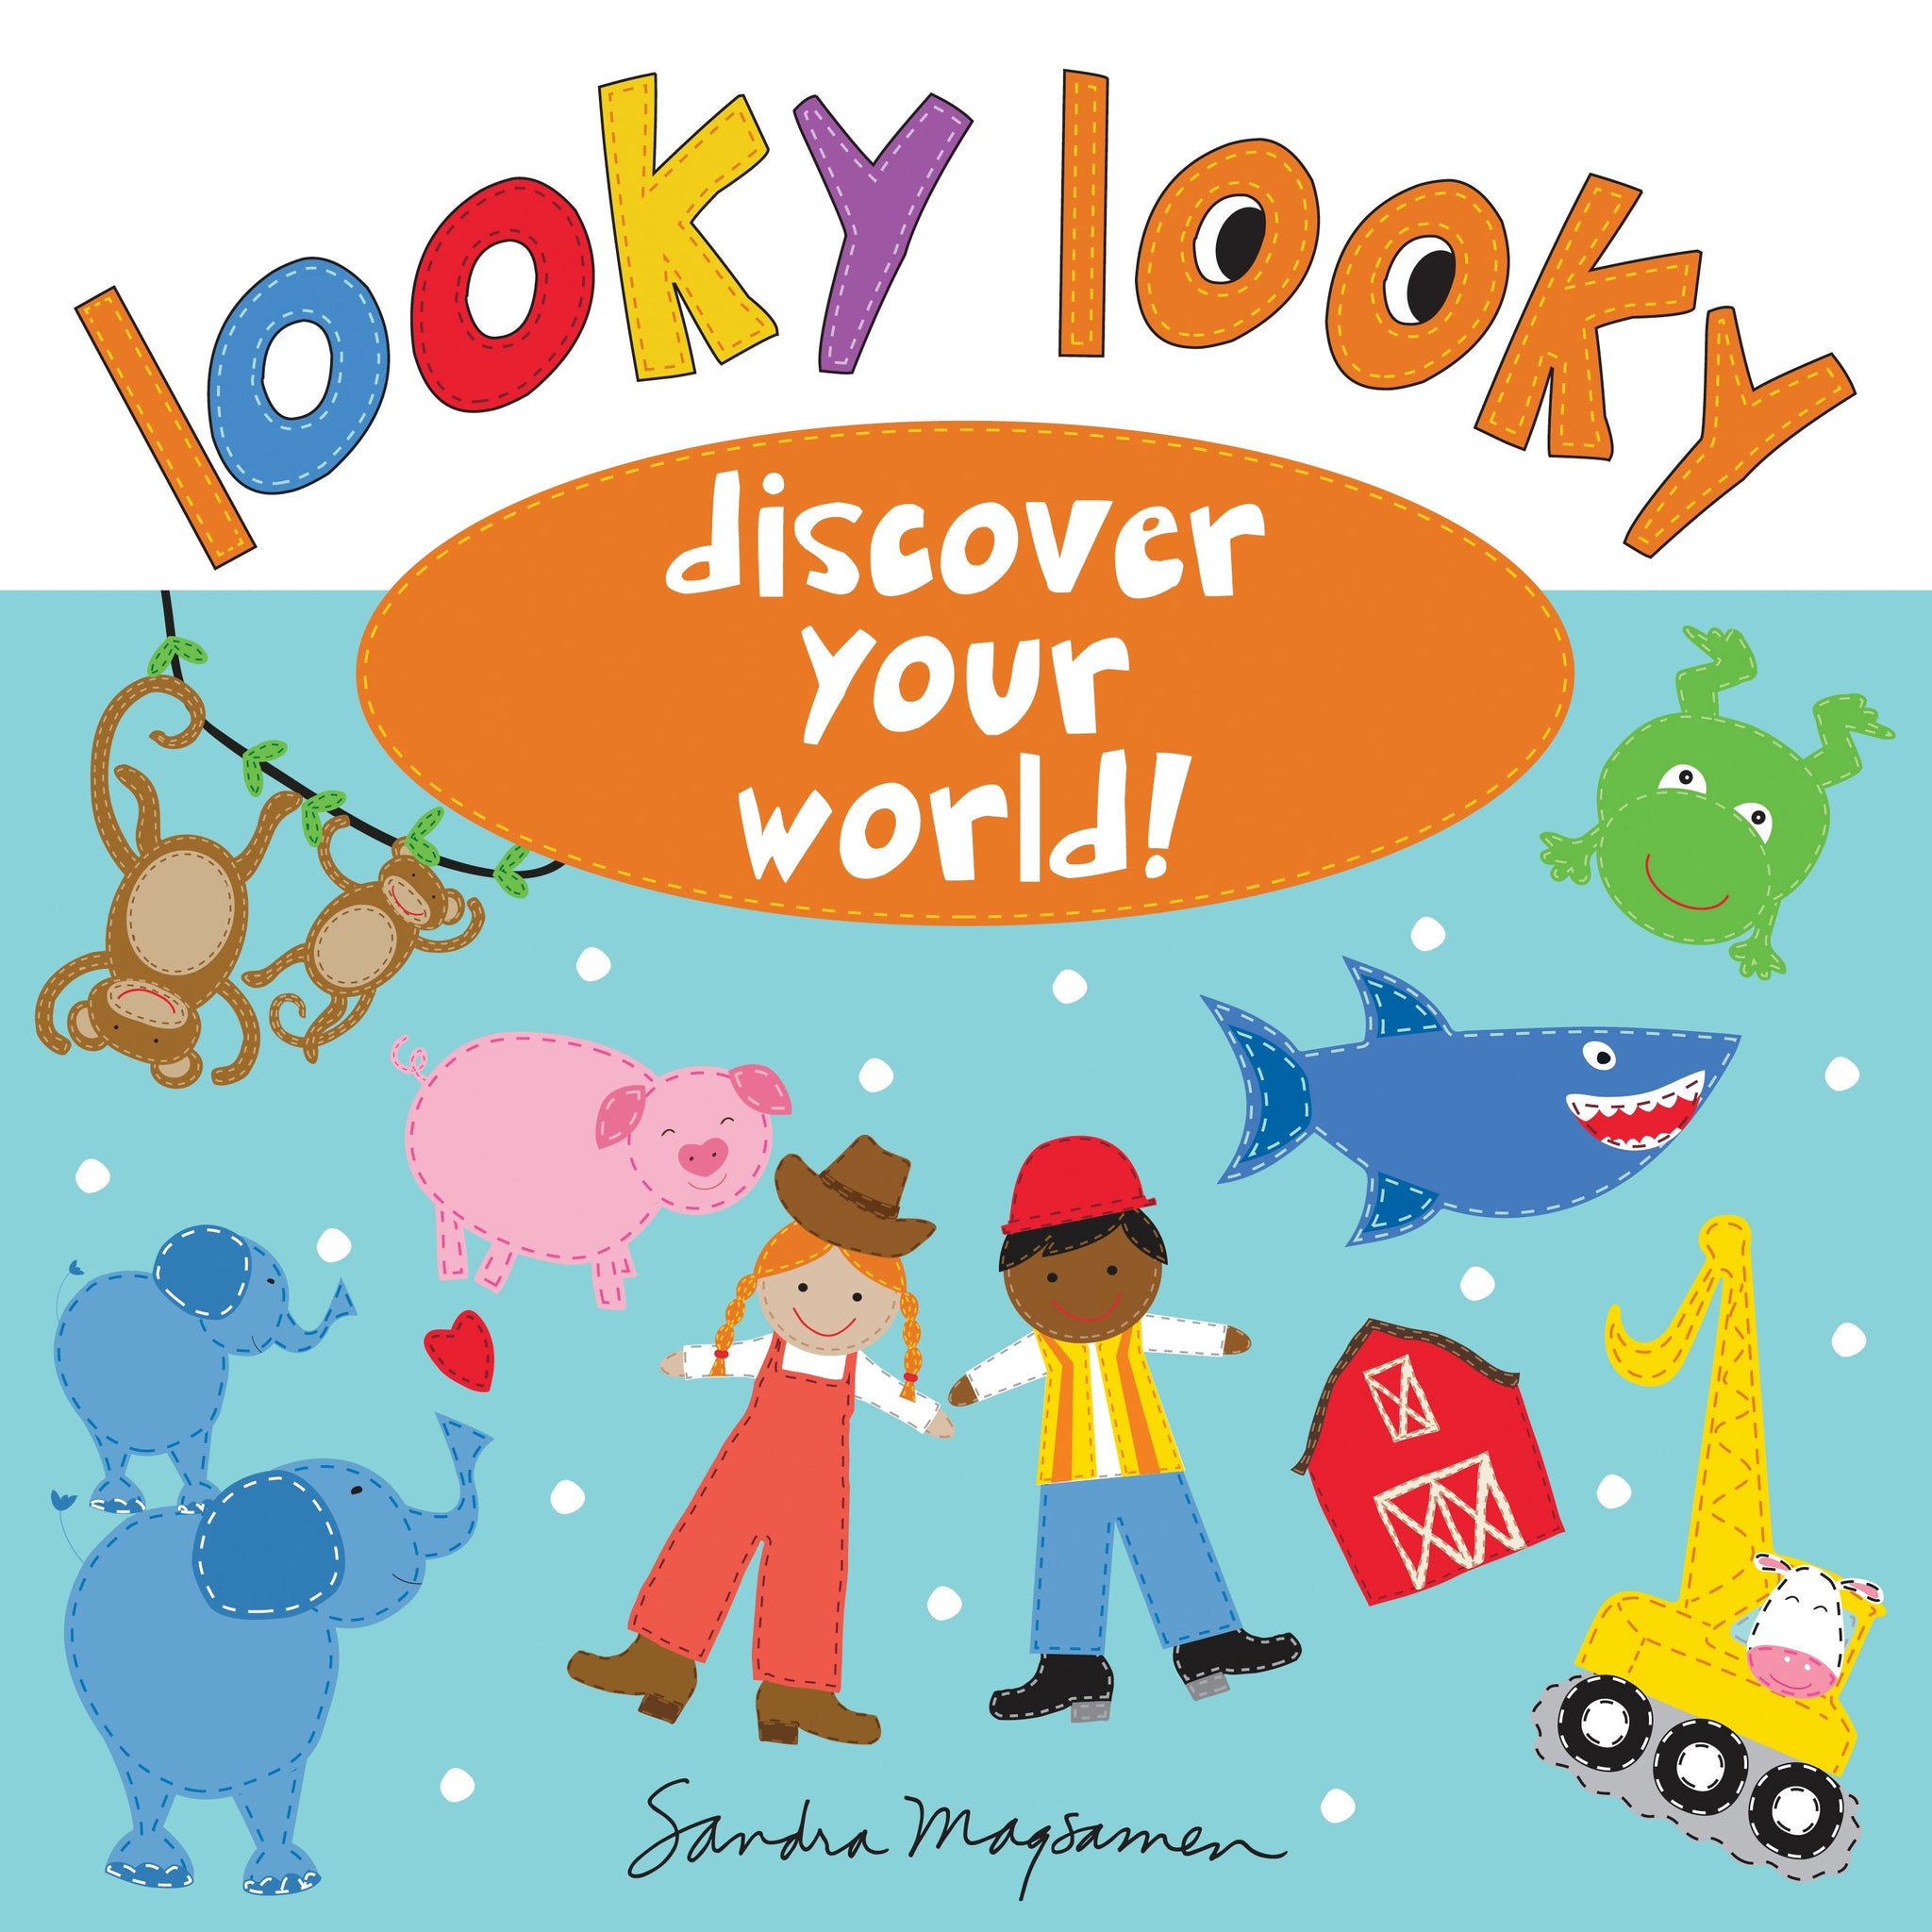 Looky Looky: Discover Your World! - HoneyBug 